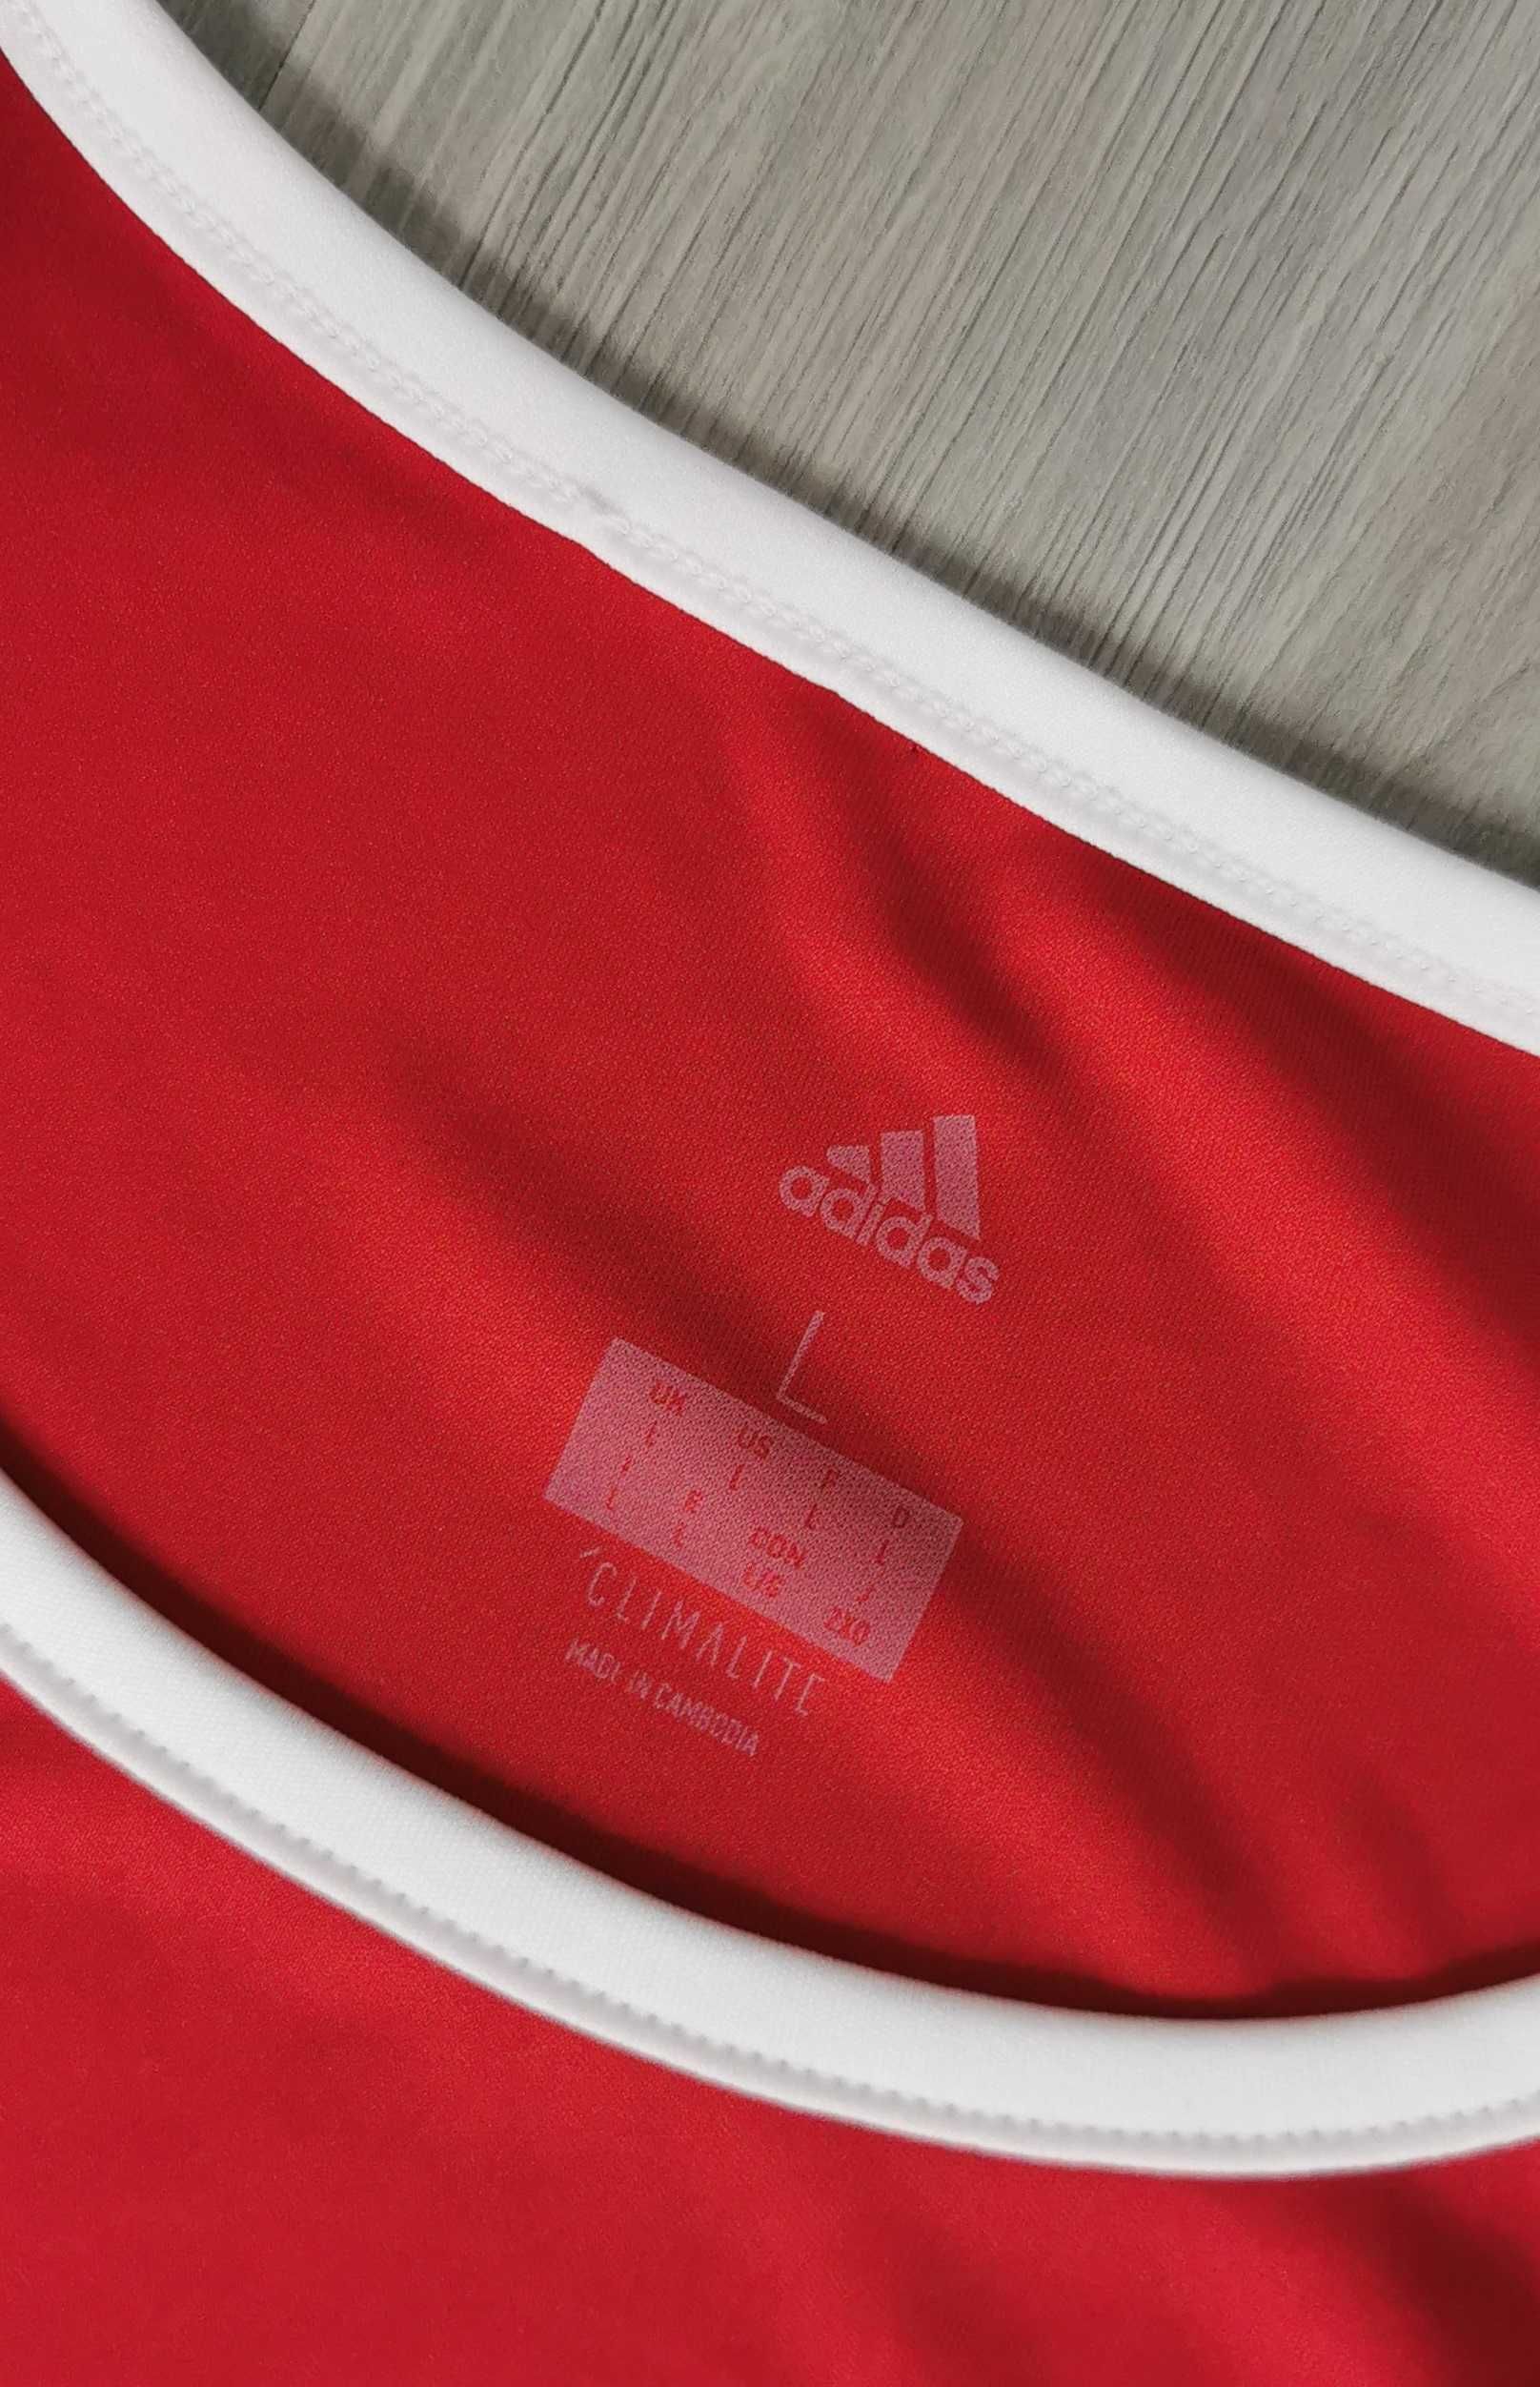 T-shirt sportowy Adidas Manchester United red size rozmiar L/XL